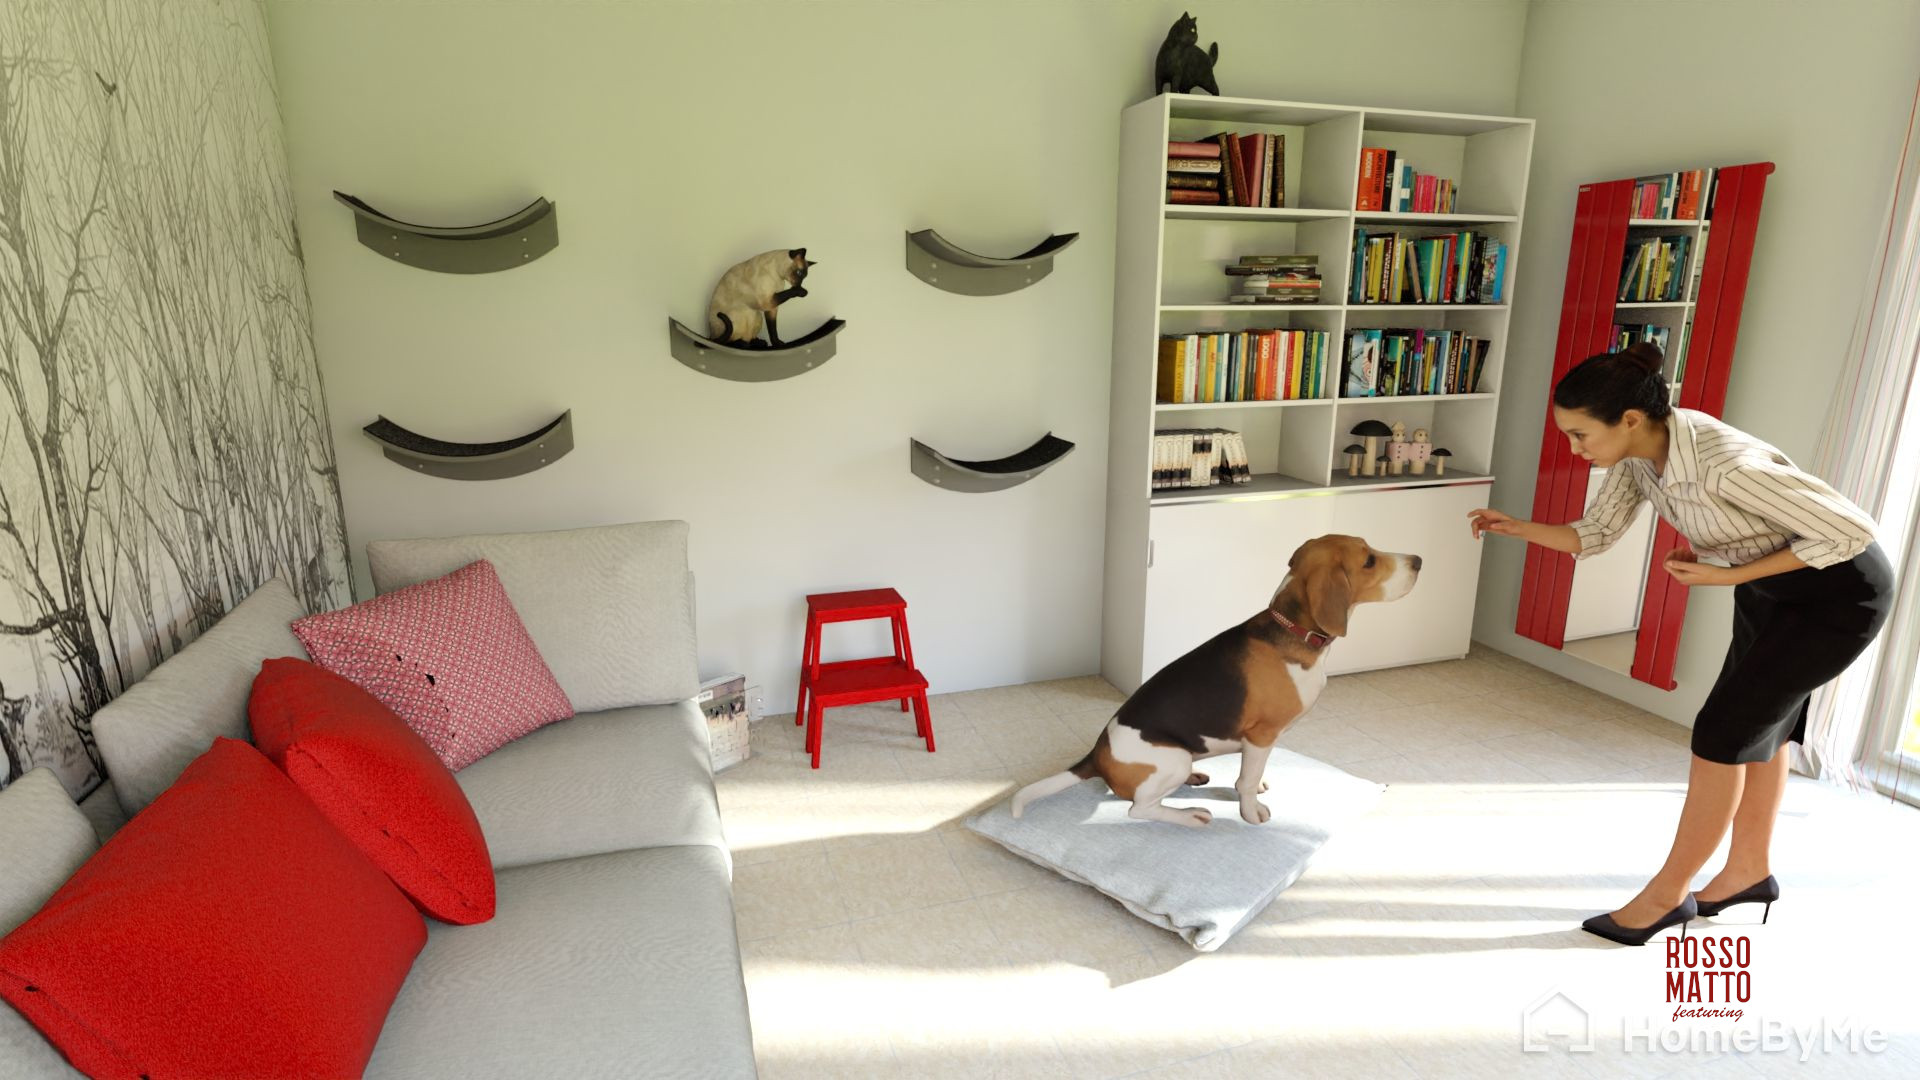 wholesale pet friendly living room furniture